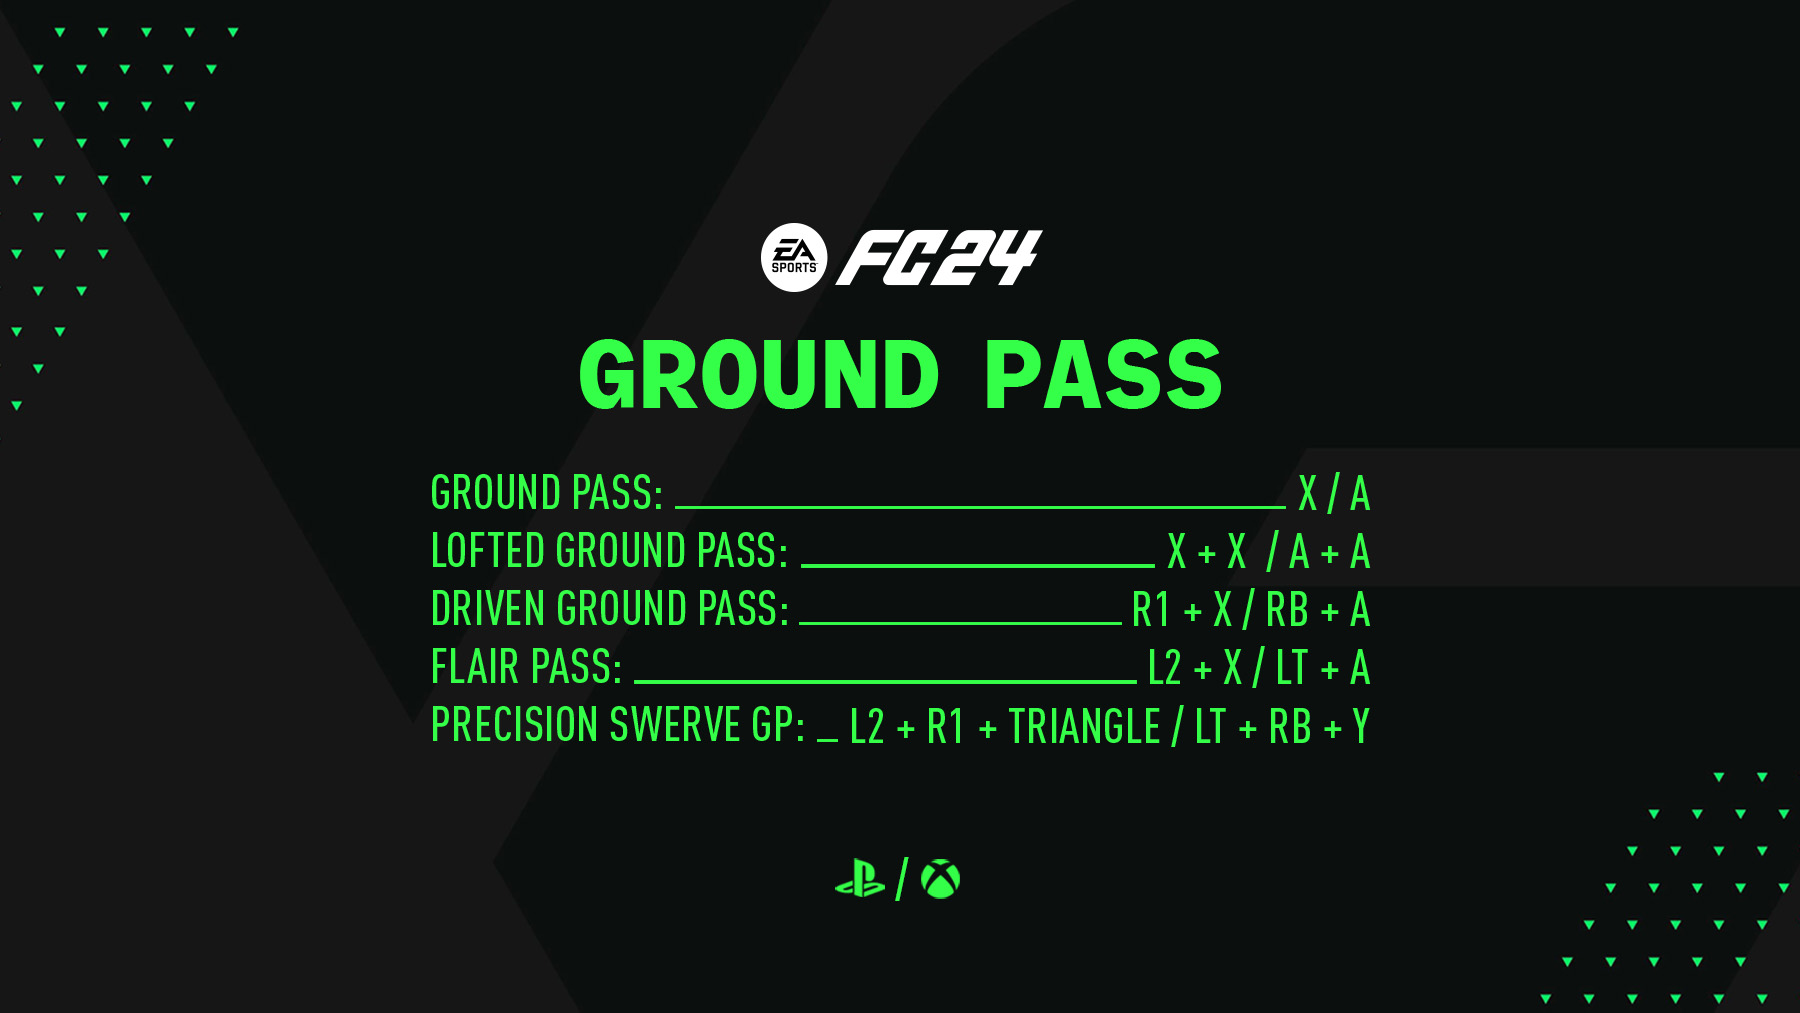 FC 24 Ground Pass (Driven Ground Pass, Lofted Ground Pass, Flair Pass, Precision Swerve Ground Pass)